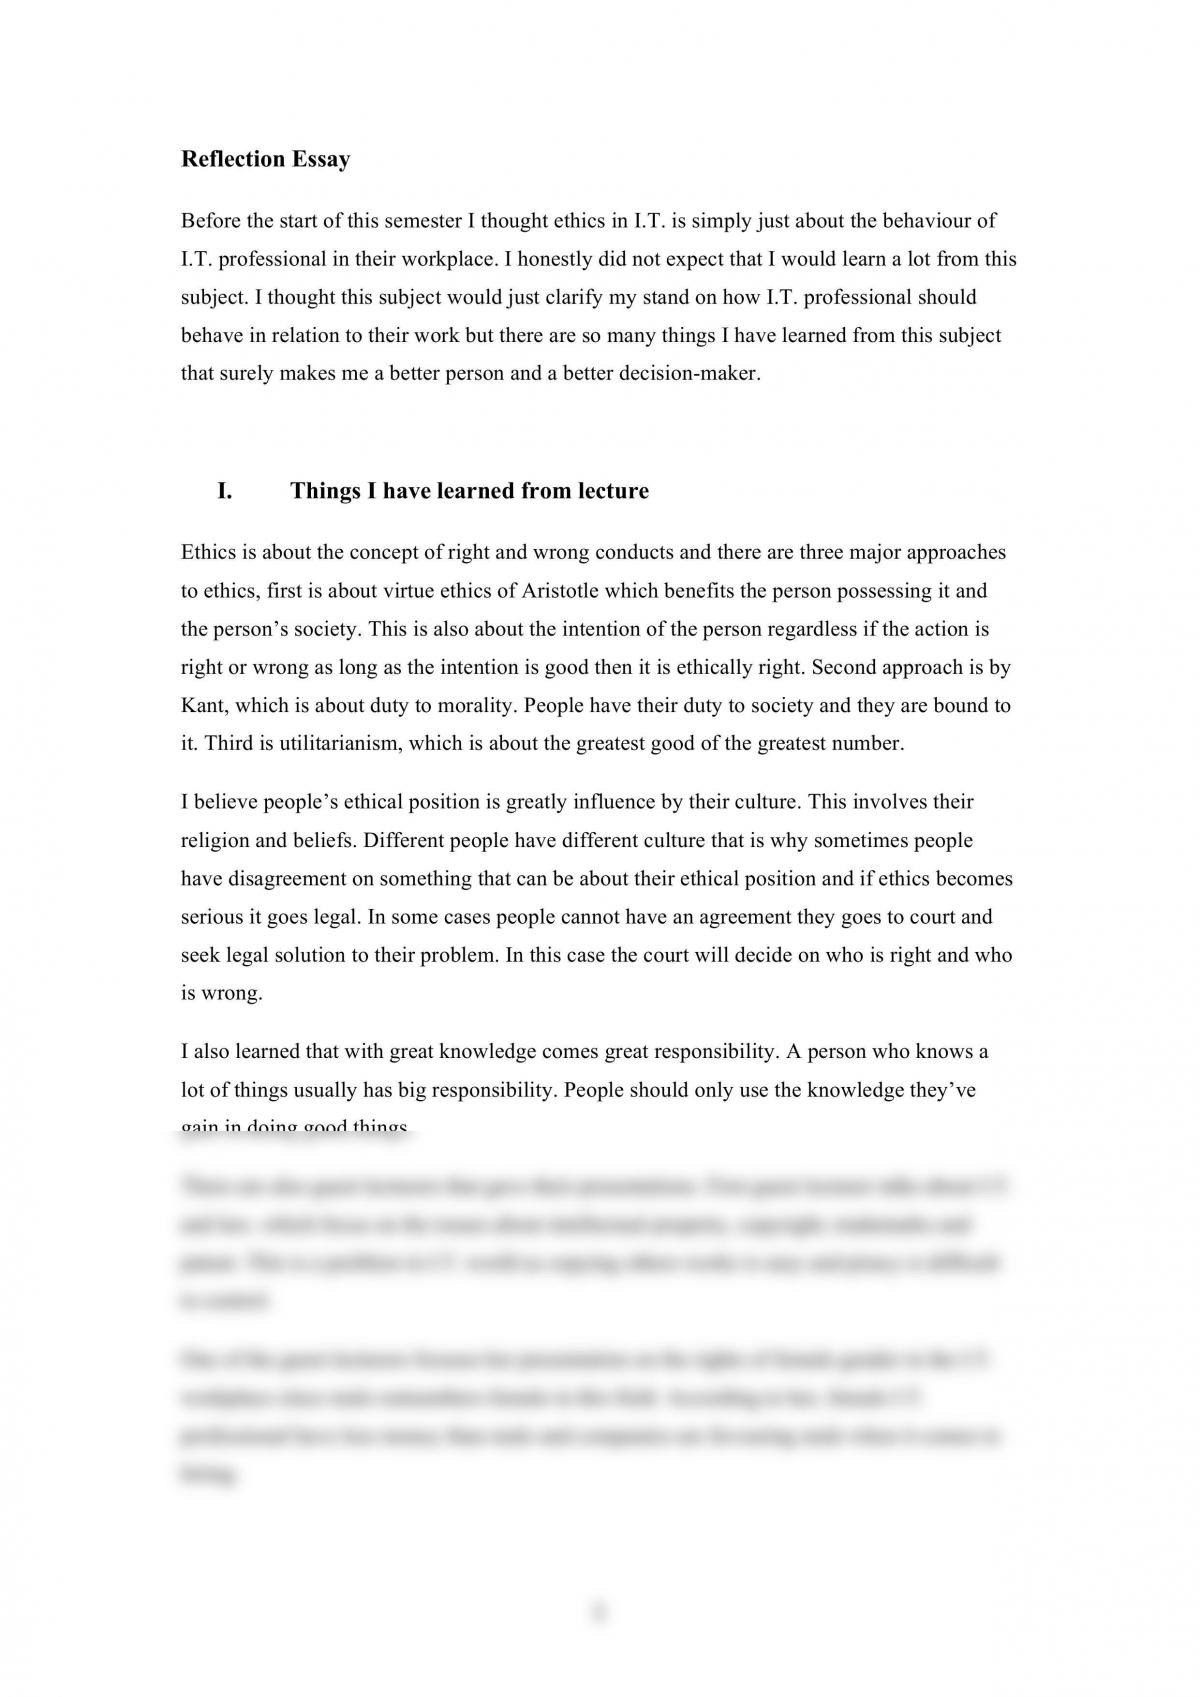 ethics essay - Page 1